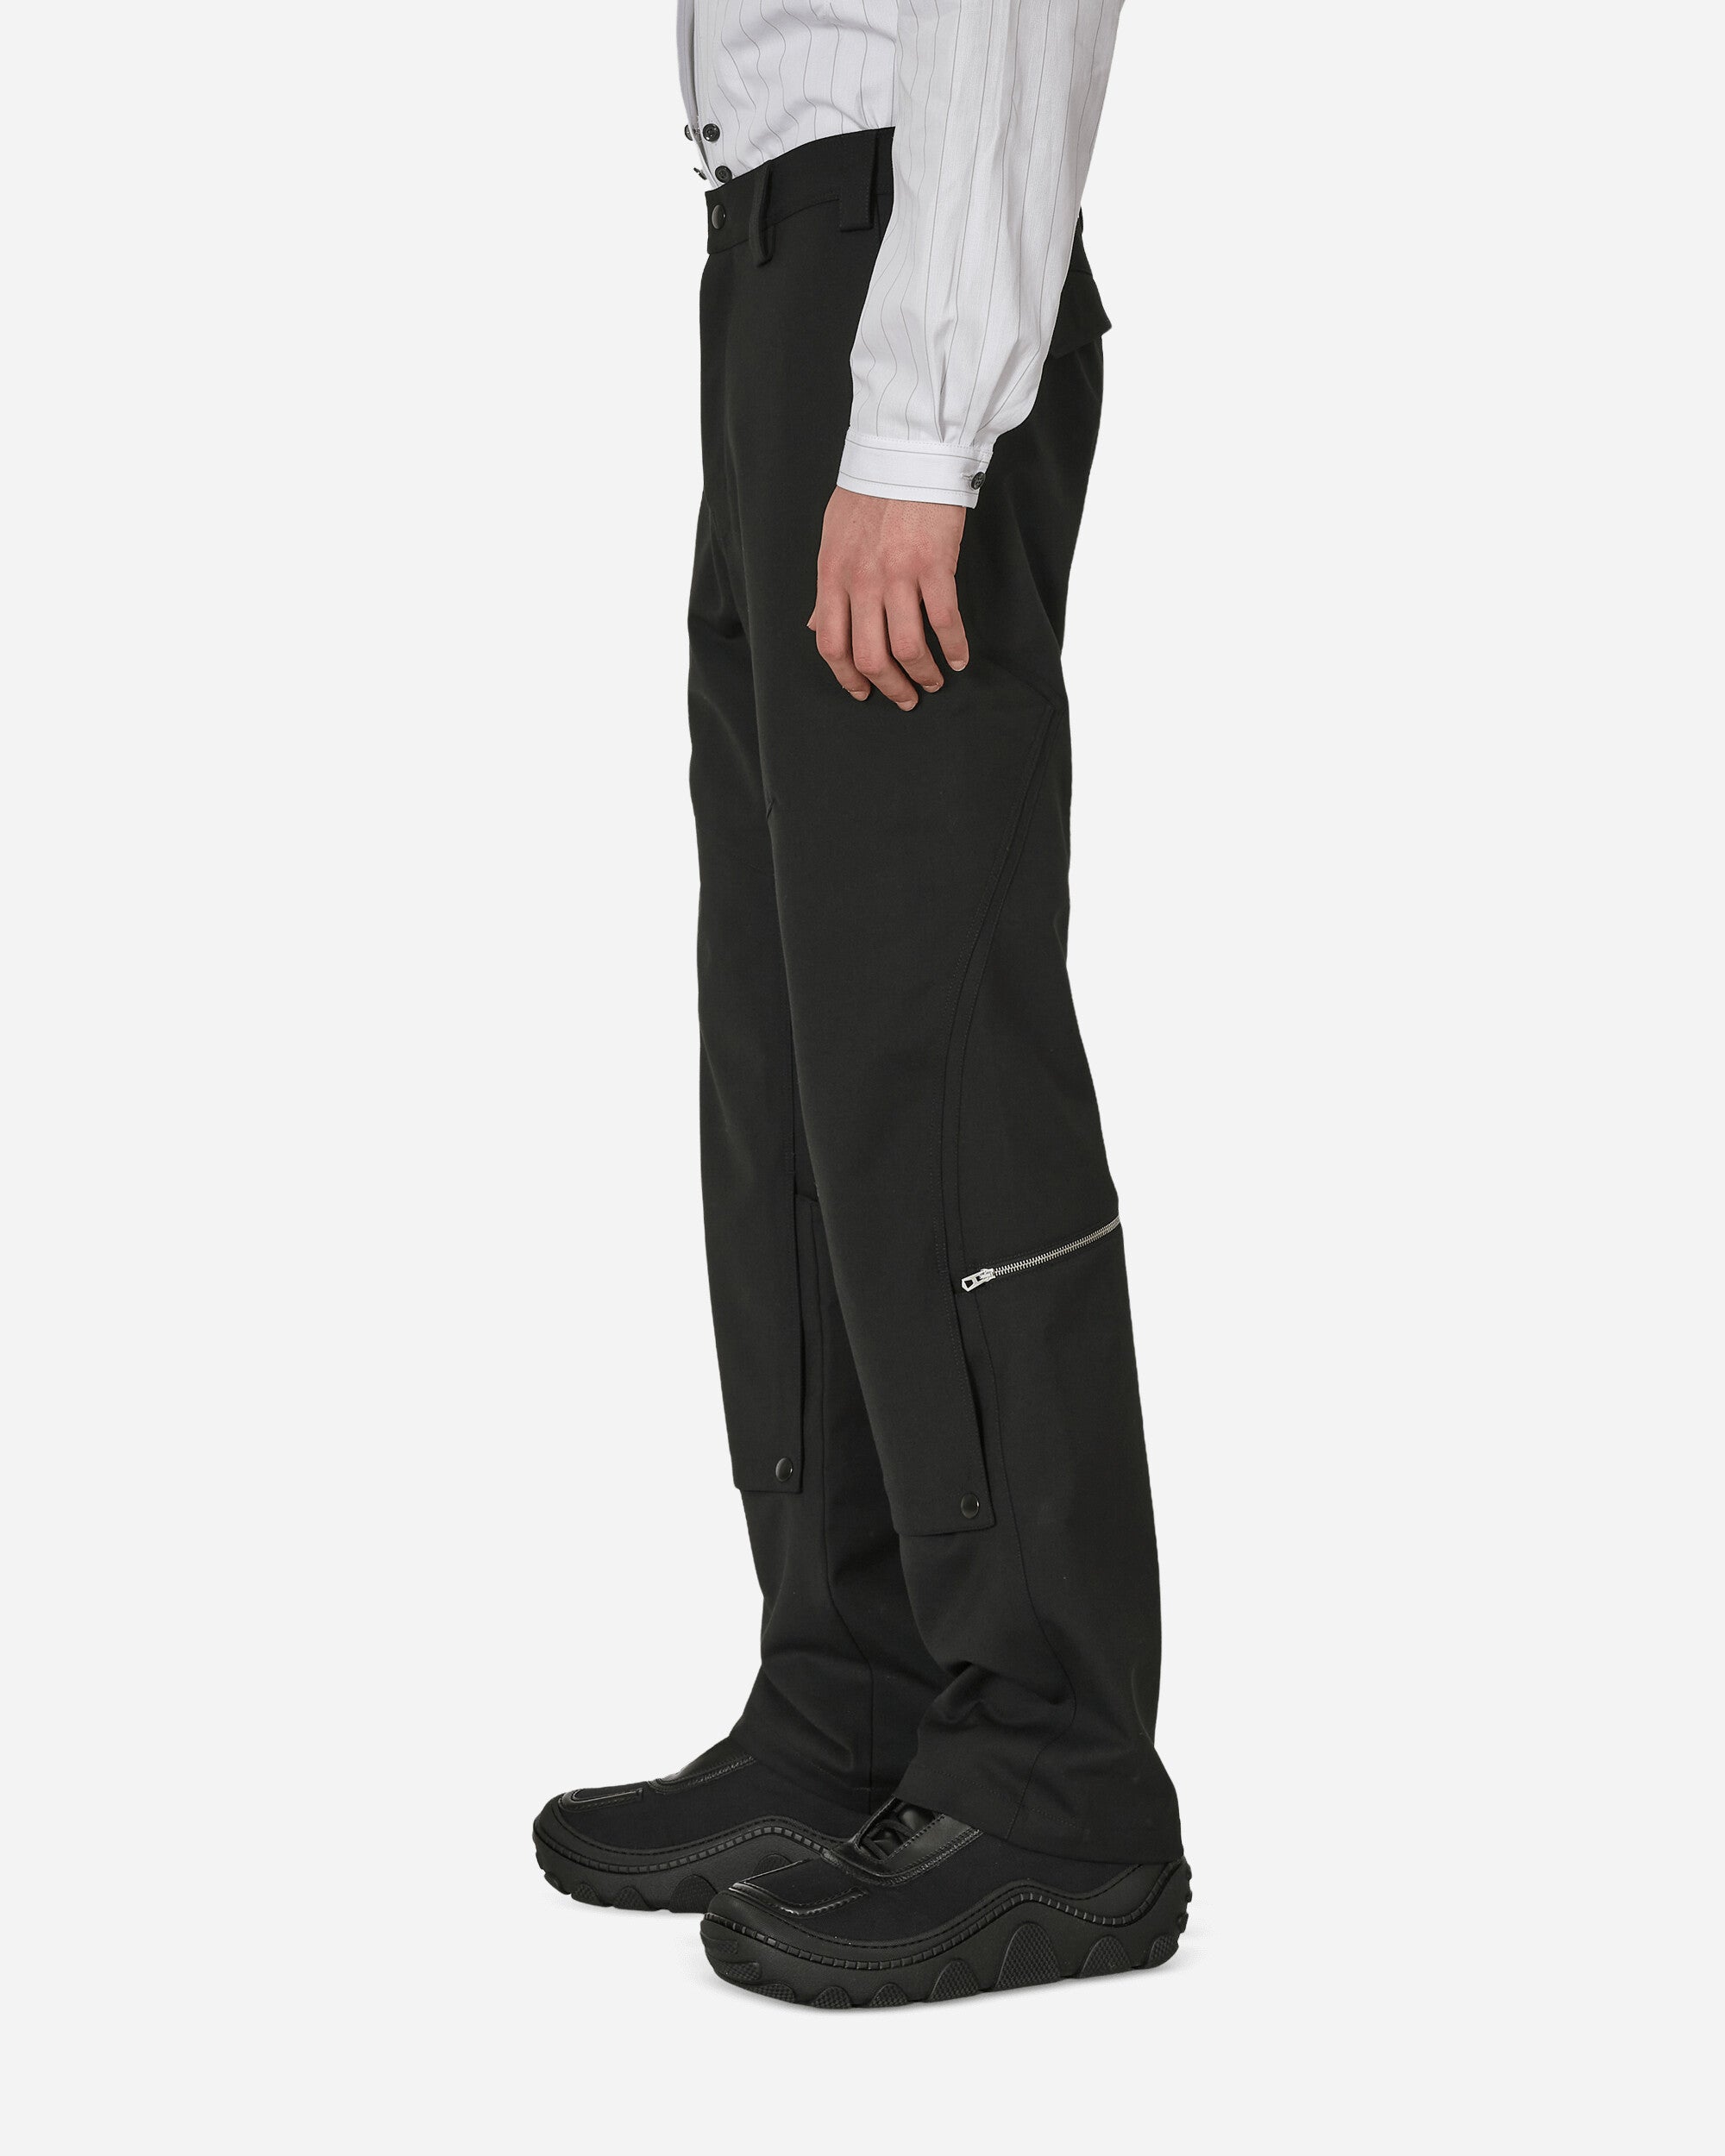 Kiko Kostadinov Tonino Utility Trouser Night Black Pants Trousers KKSS24T04 16